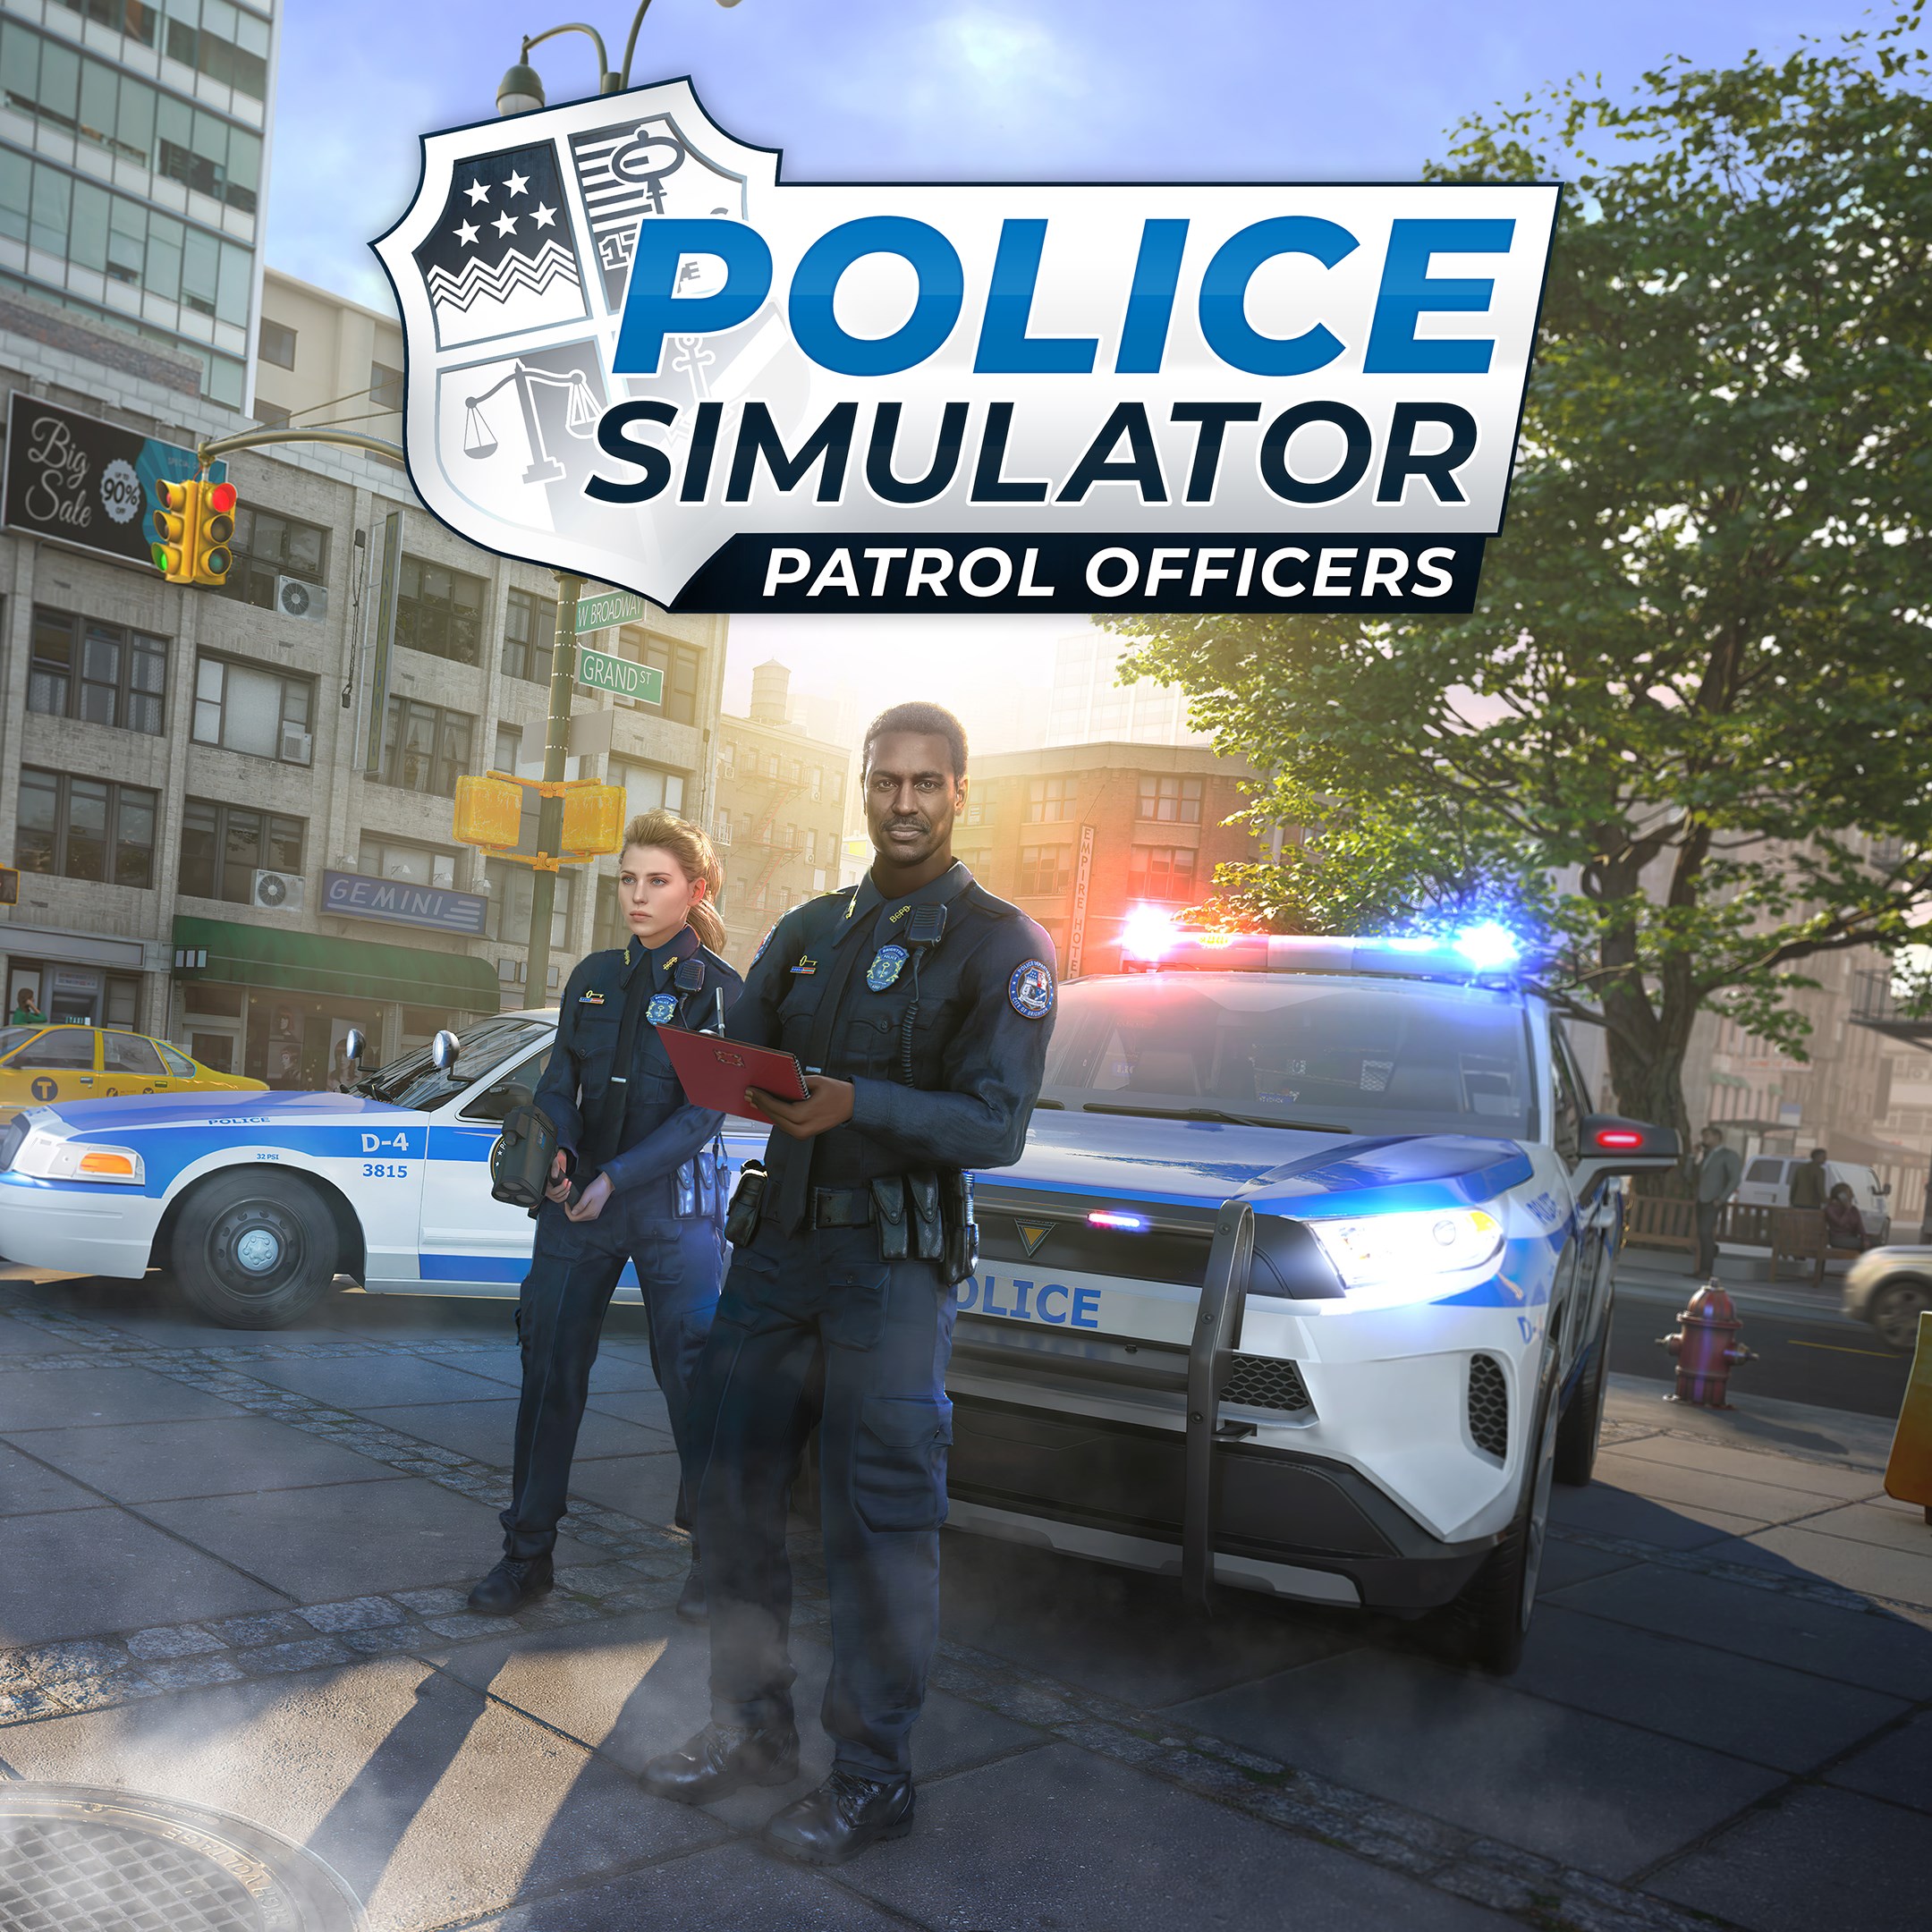 Police Simulator: Patrol Officers Videos TrueAchievements News and 